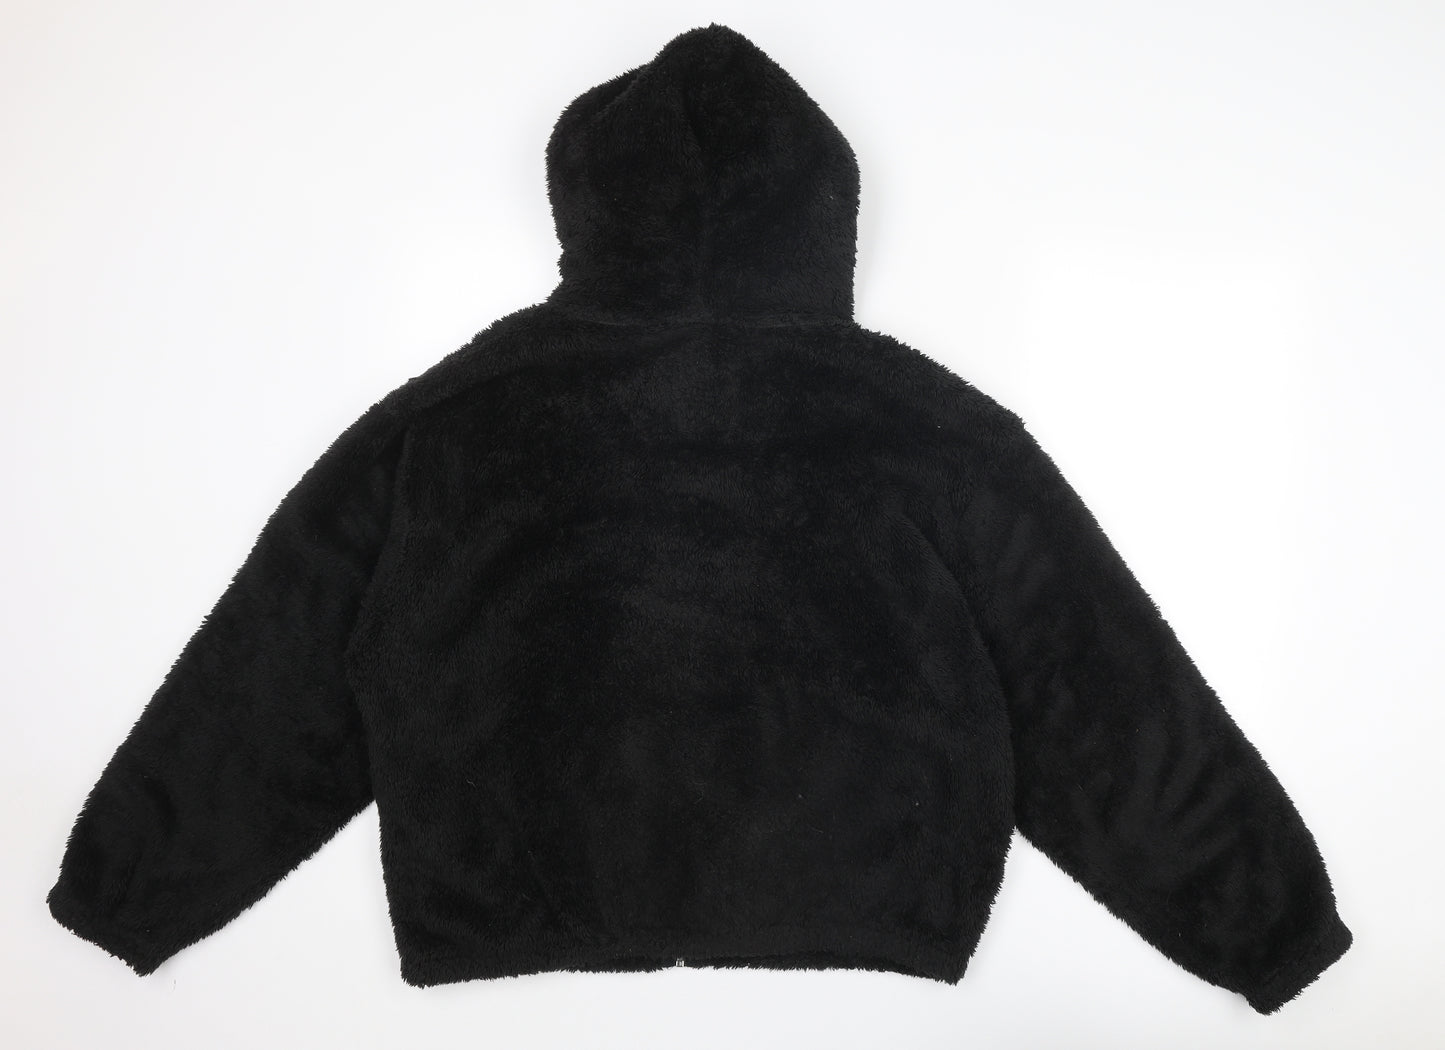 Pull&Bear Womens Black Jacket Size M Zip - Fluffy